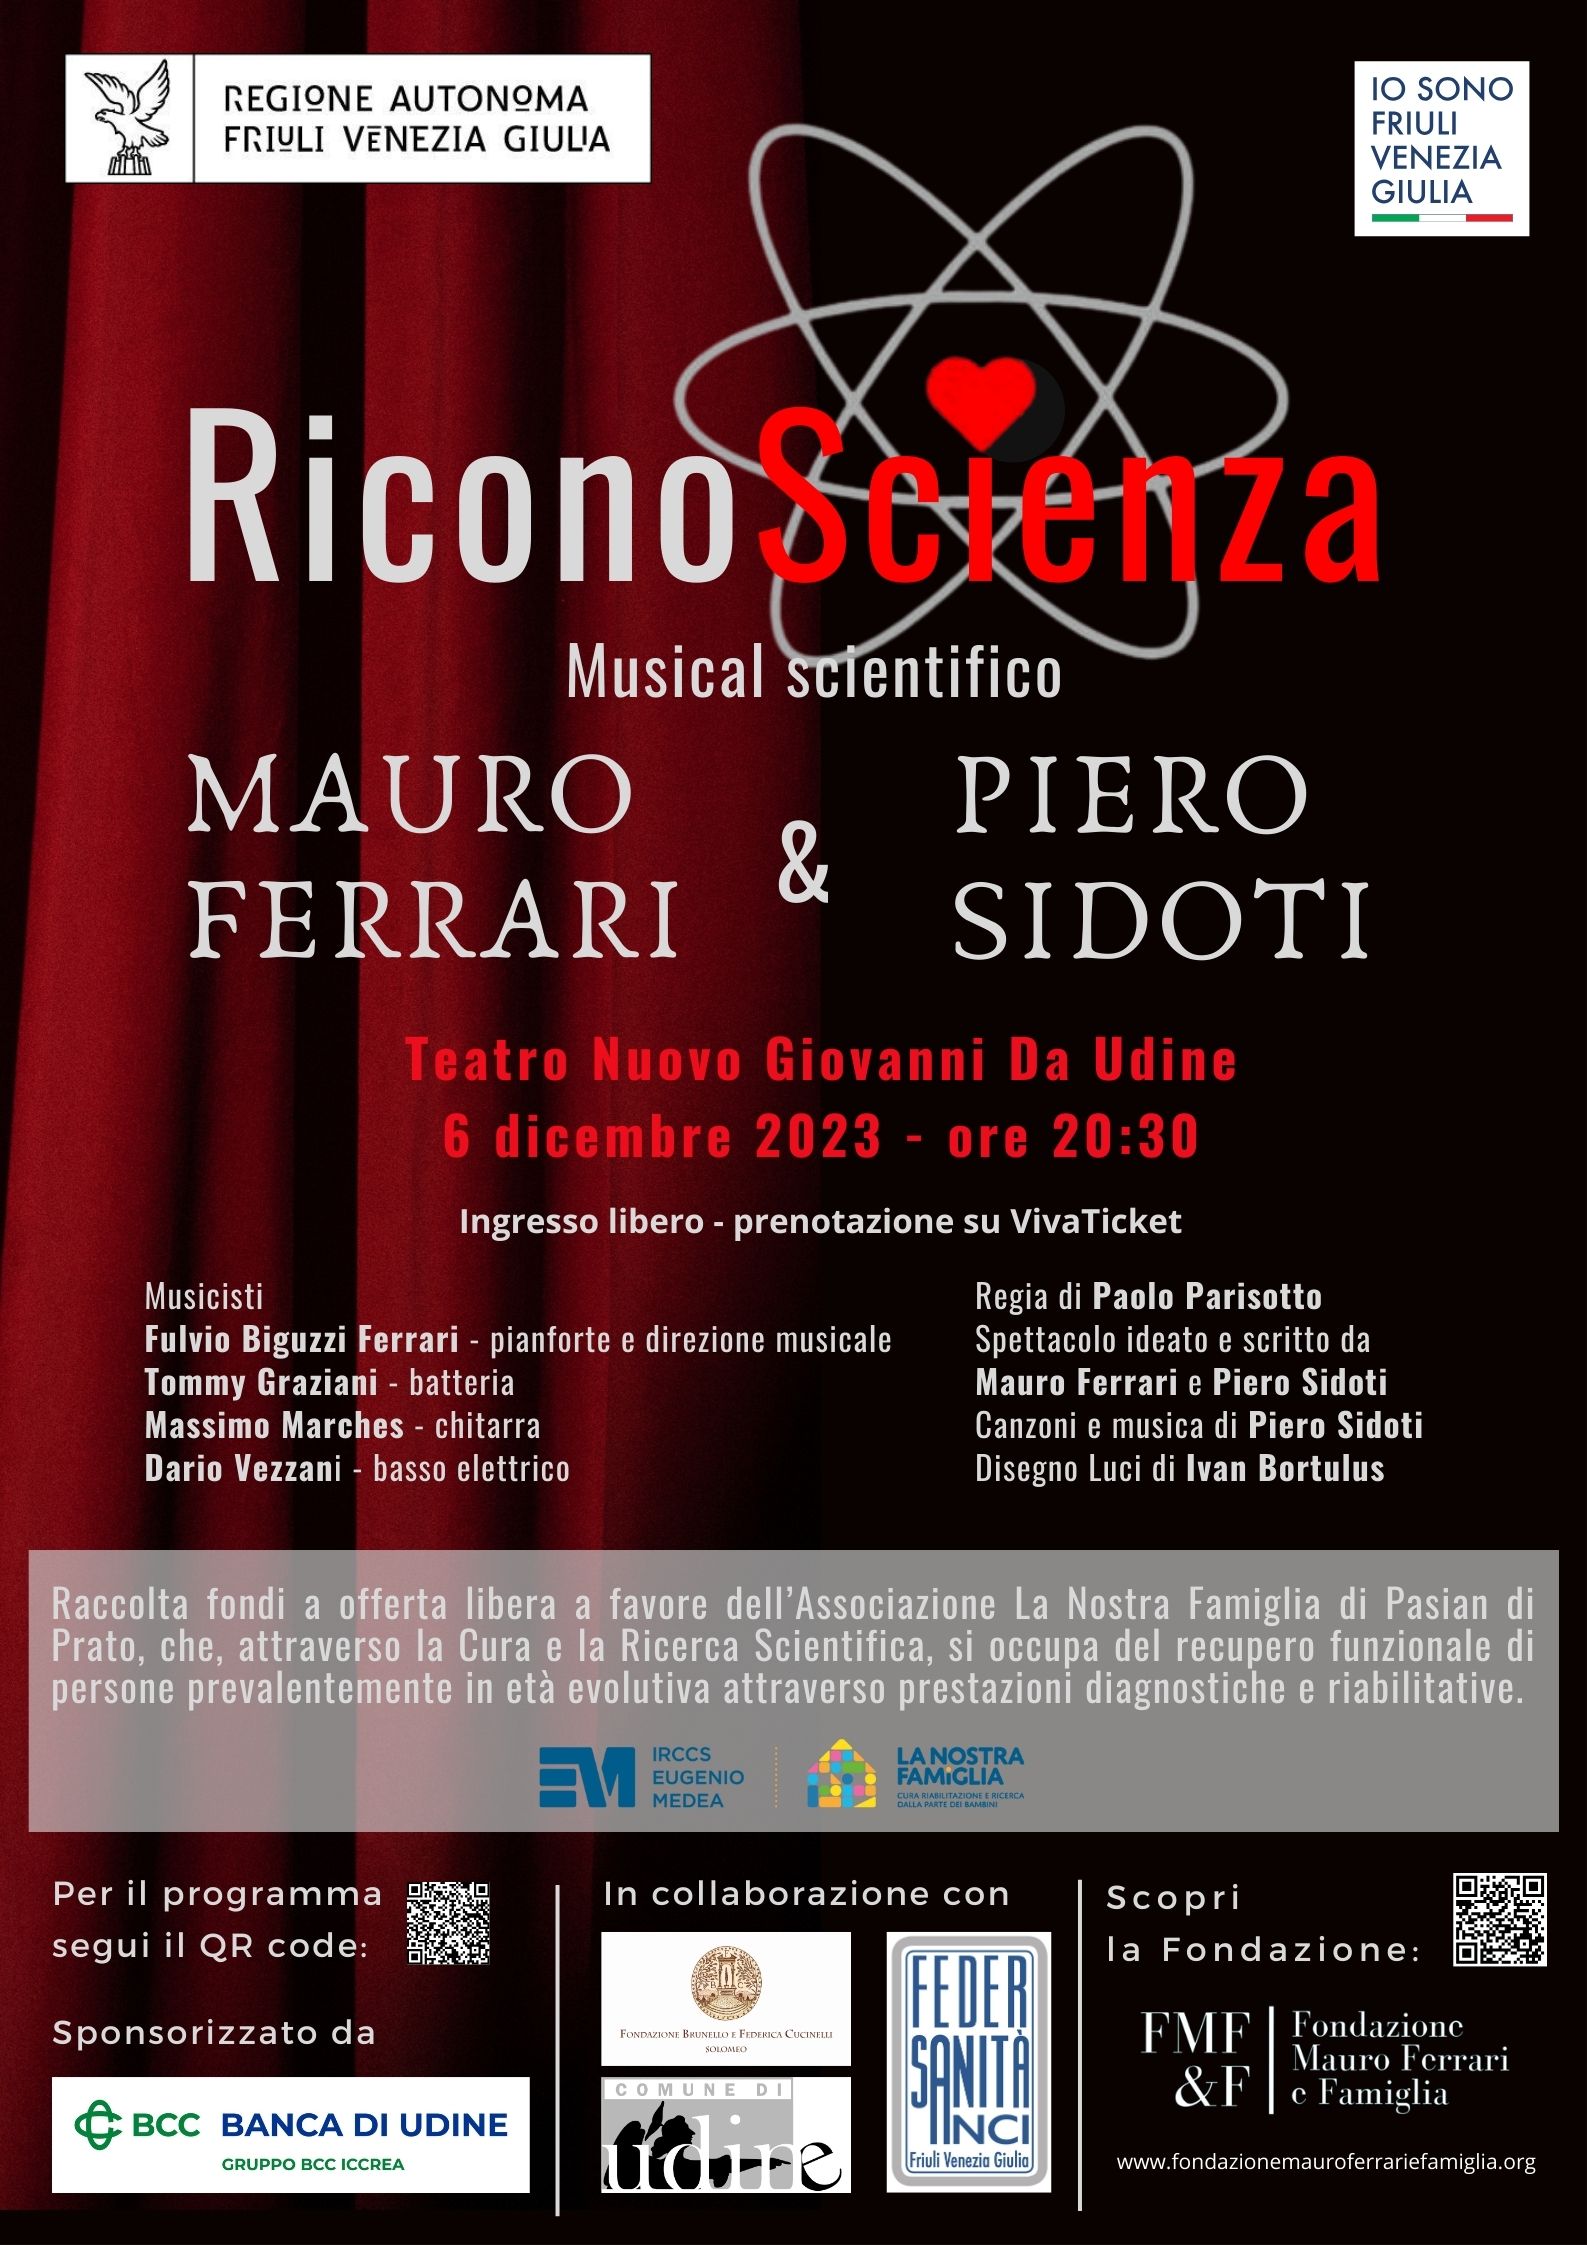 “RICONOSCIENZA”, the show that combines the music of Piero Sidoti and the science of Mauro Ferrari Wednesday, December 6 – Teatro Nuovo Giovanni da Udine.